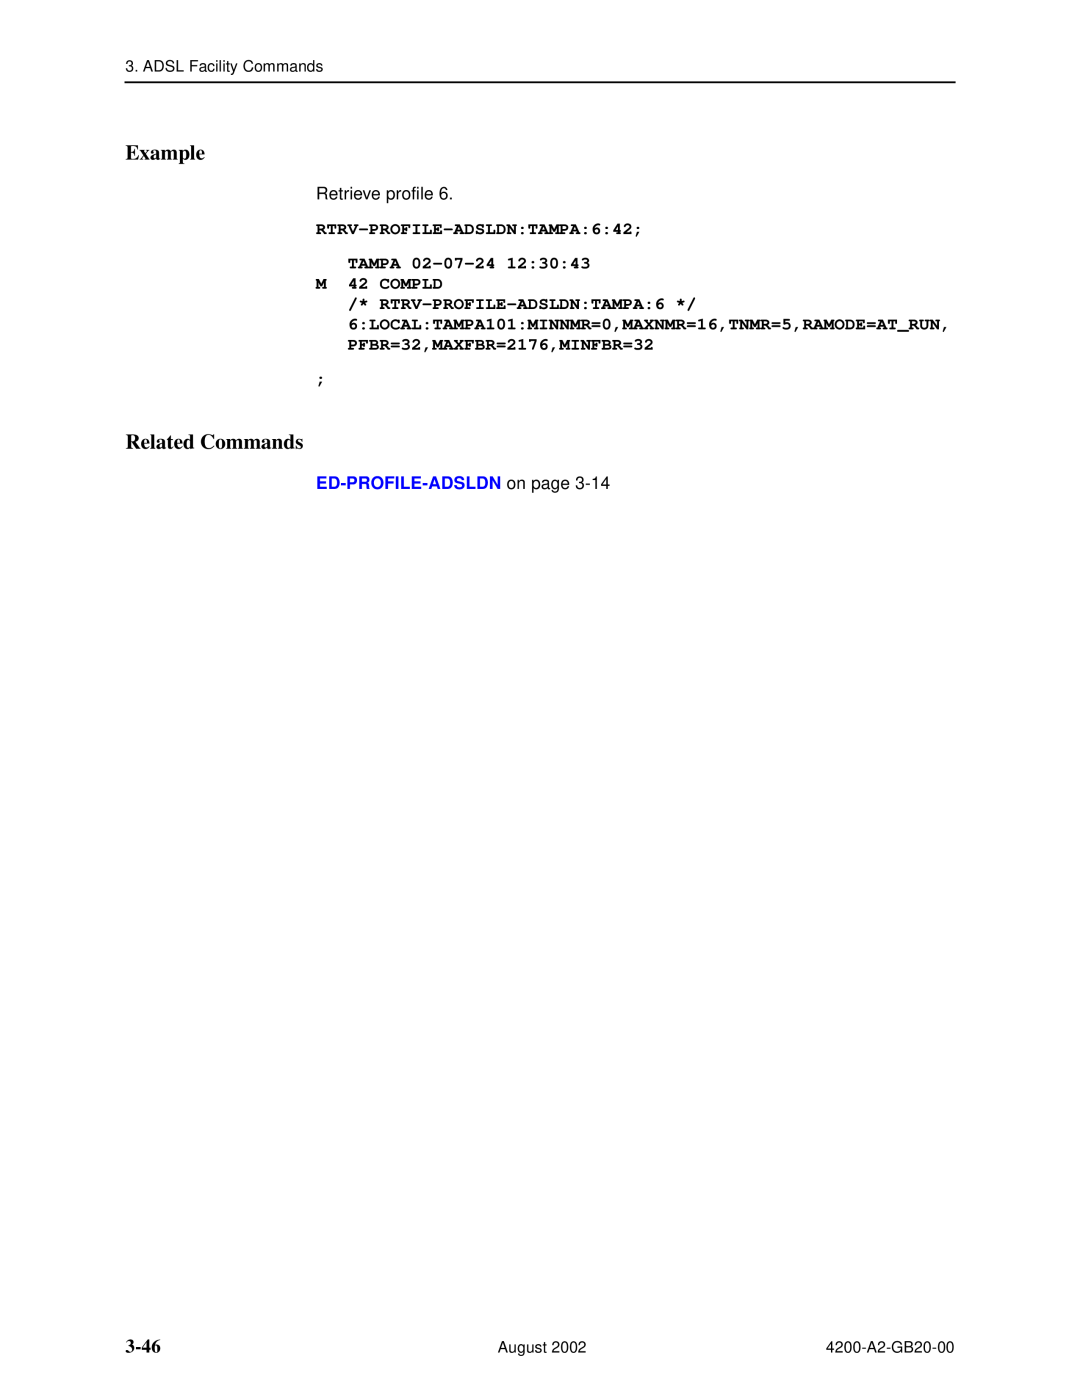 Paradyne 4200 manual 3-46, RTRV-PROFILE-ADSLDNTAMPA642 TAMPA 02-07-24 M 42 COMPLD, ED-PROFILE-ADSLDN on page, Example 